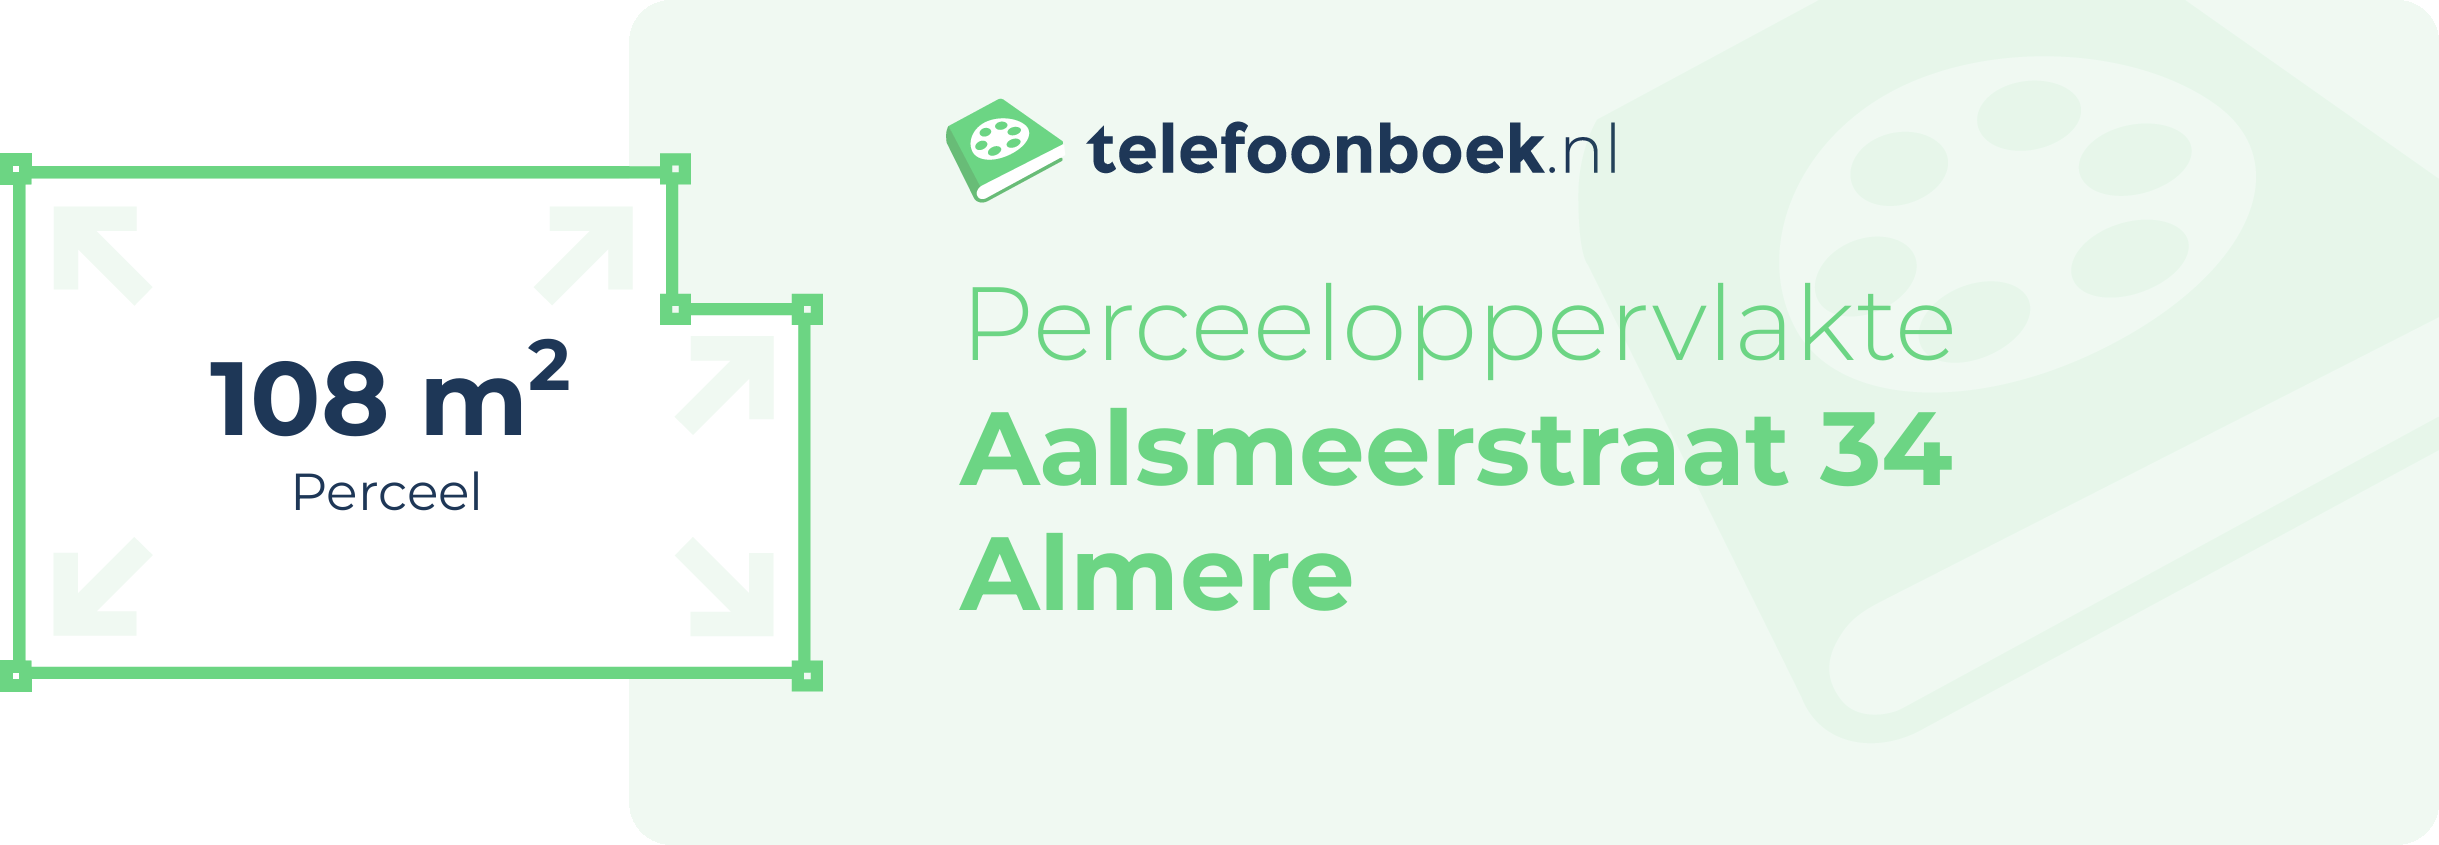 Perceeloppervlakte Aalsmeerstraat 34 Almere